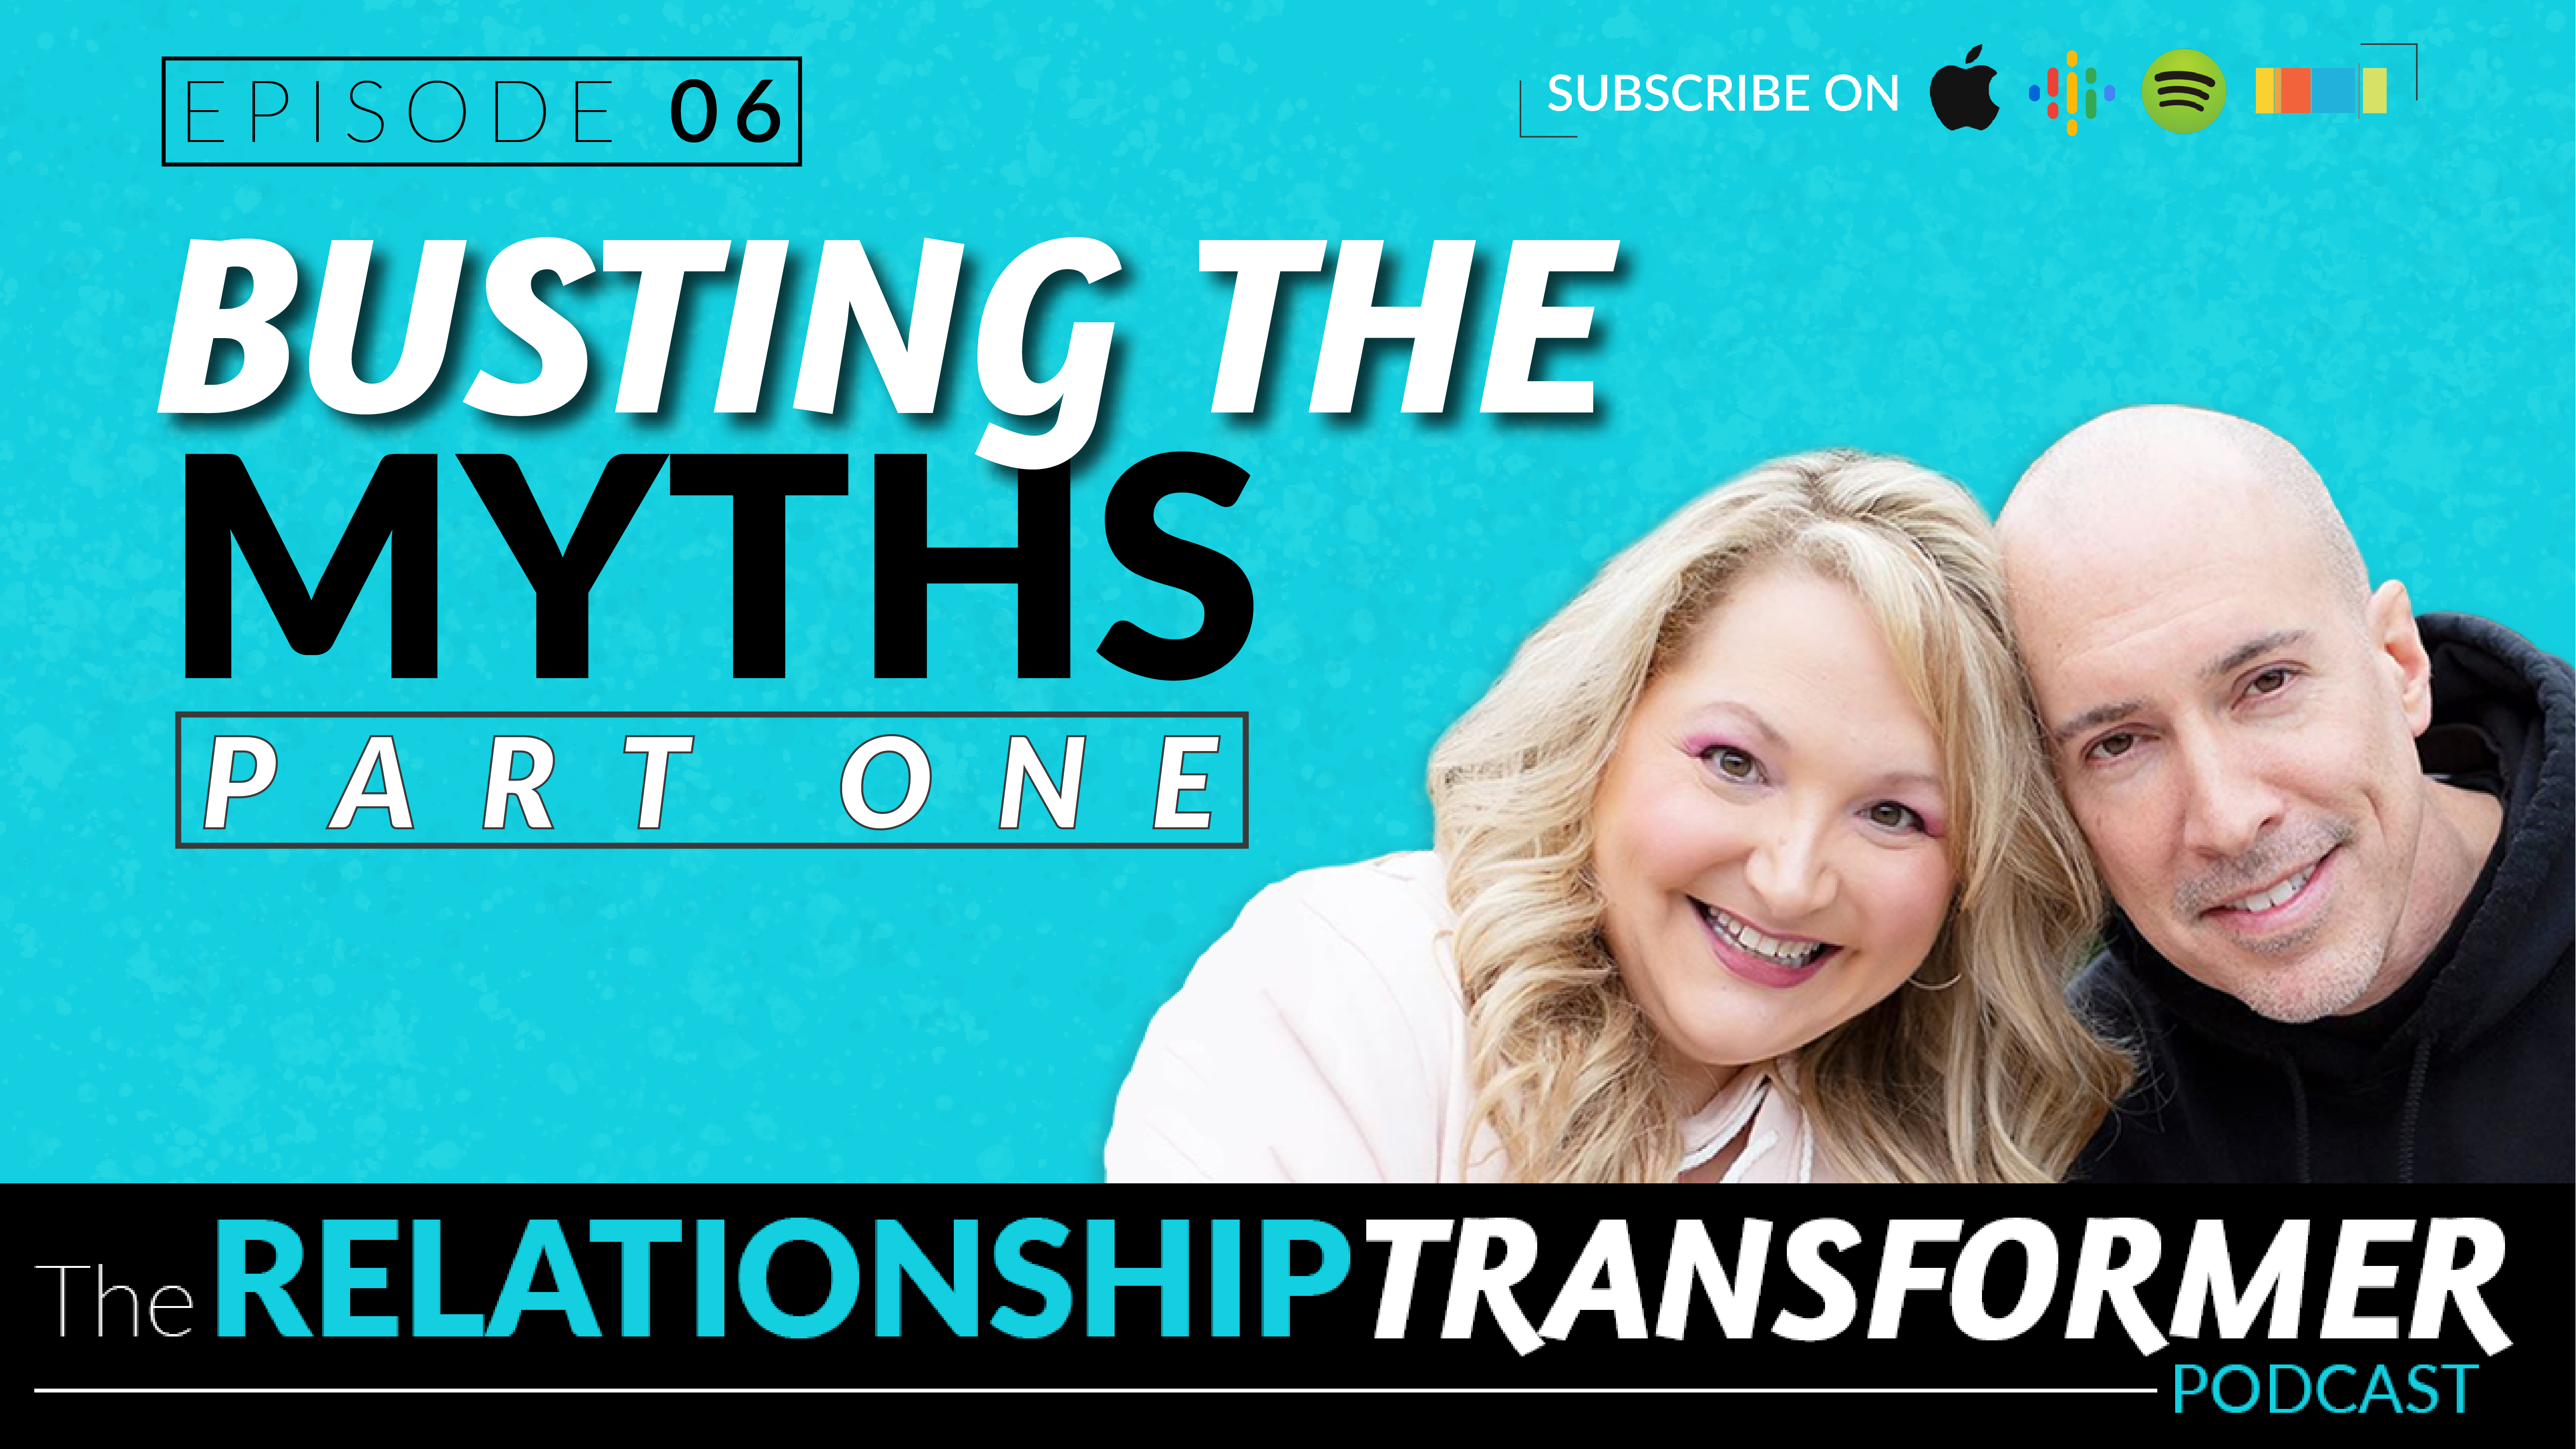 relationship transformer podcast